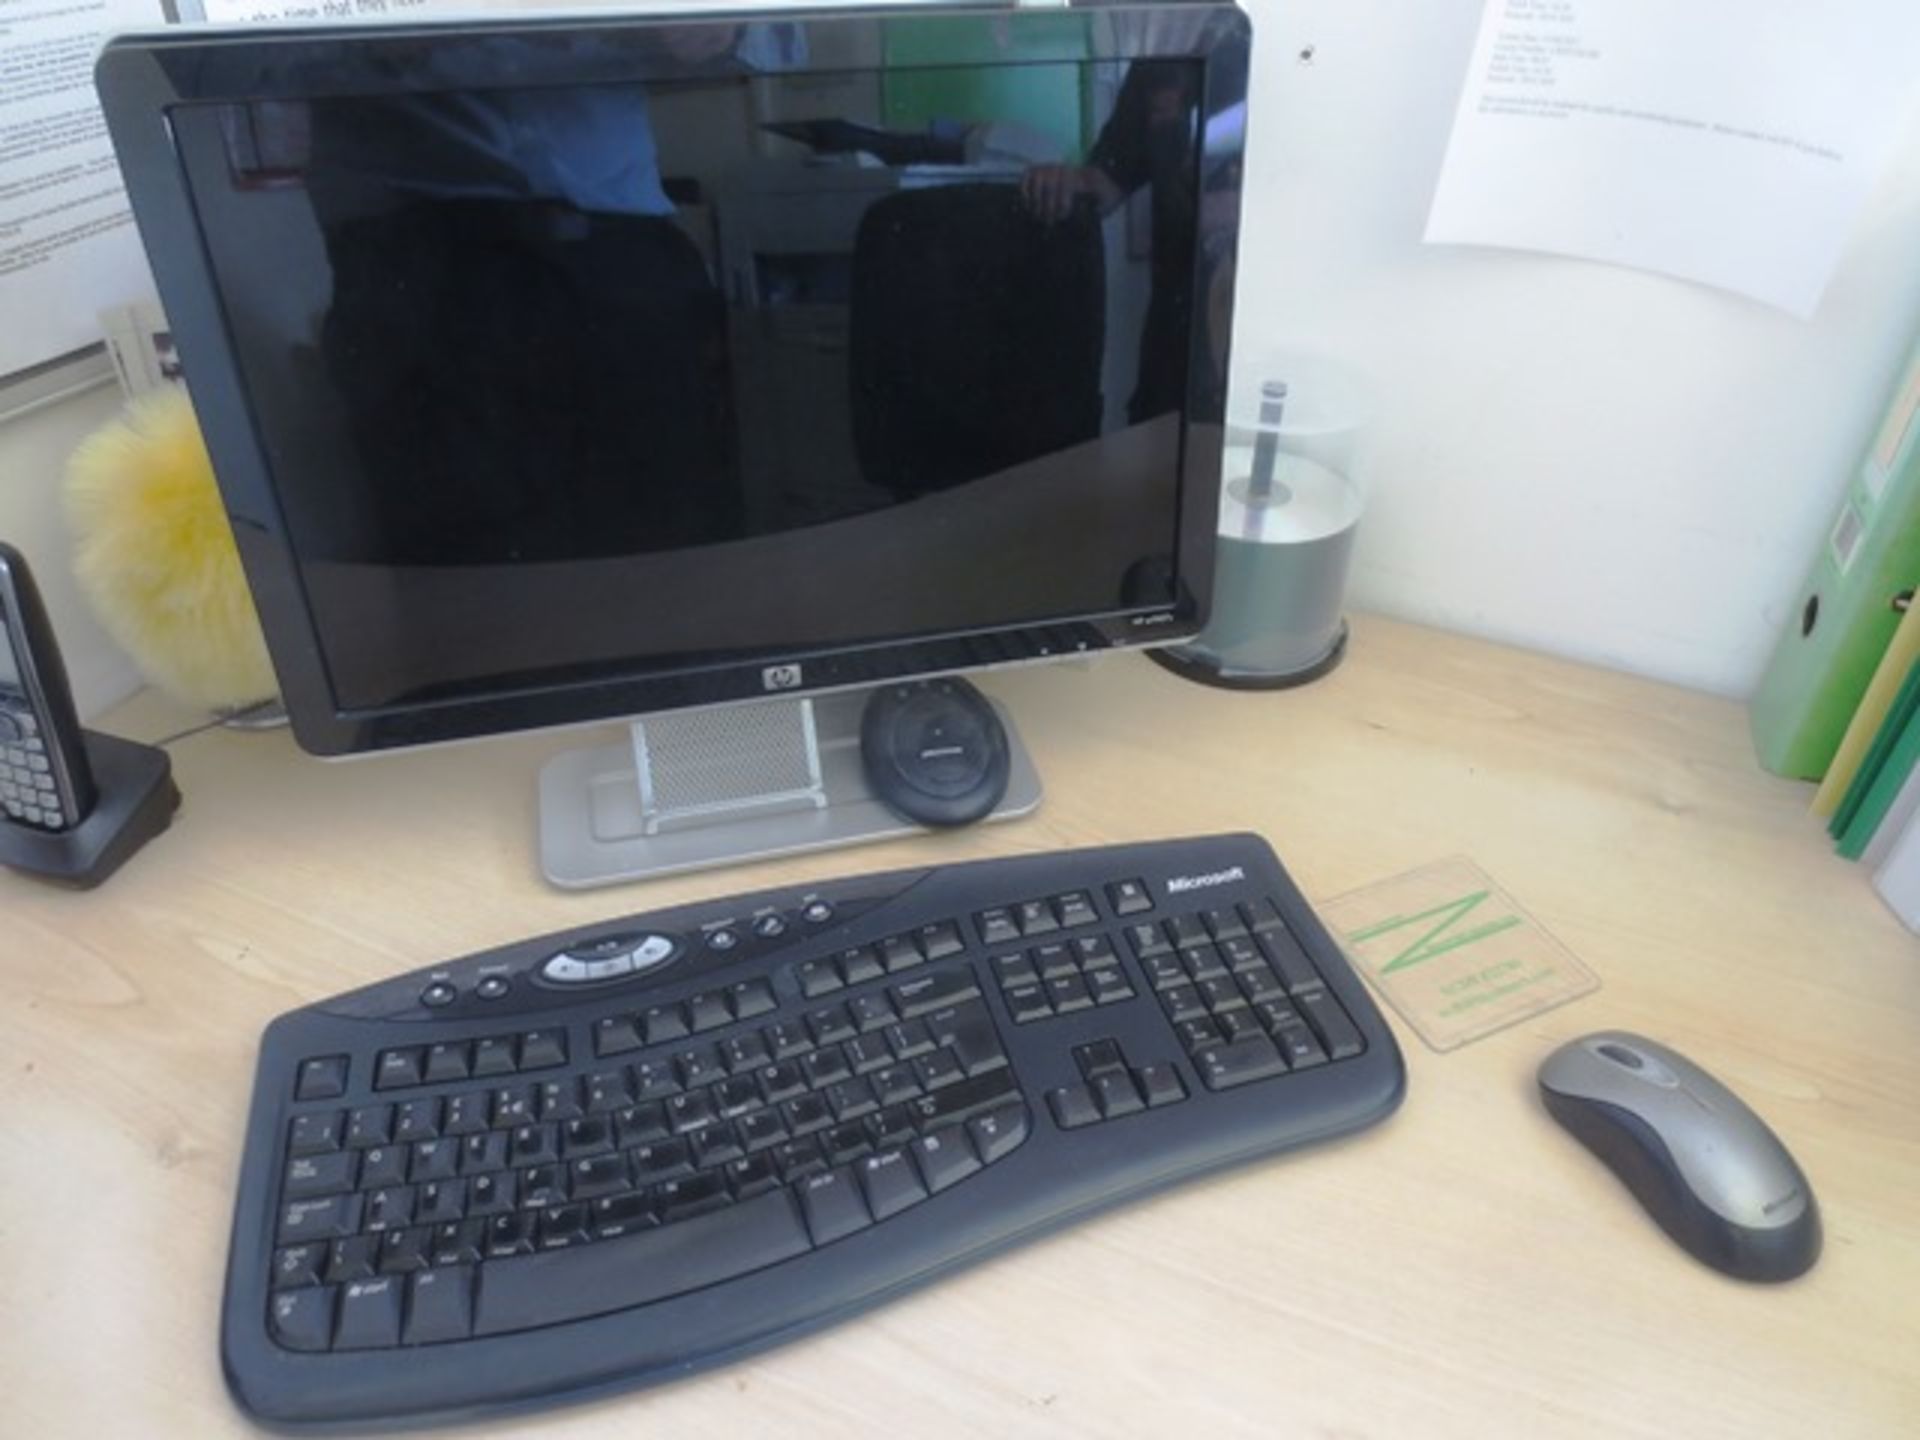 AMTEC Desktop PC, HP flat screen monitor, keyboard, mouse